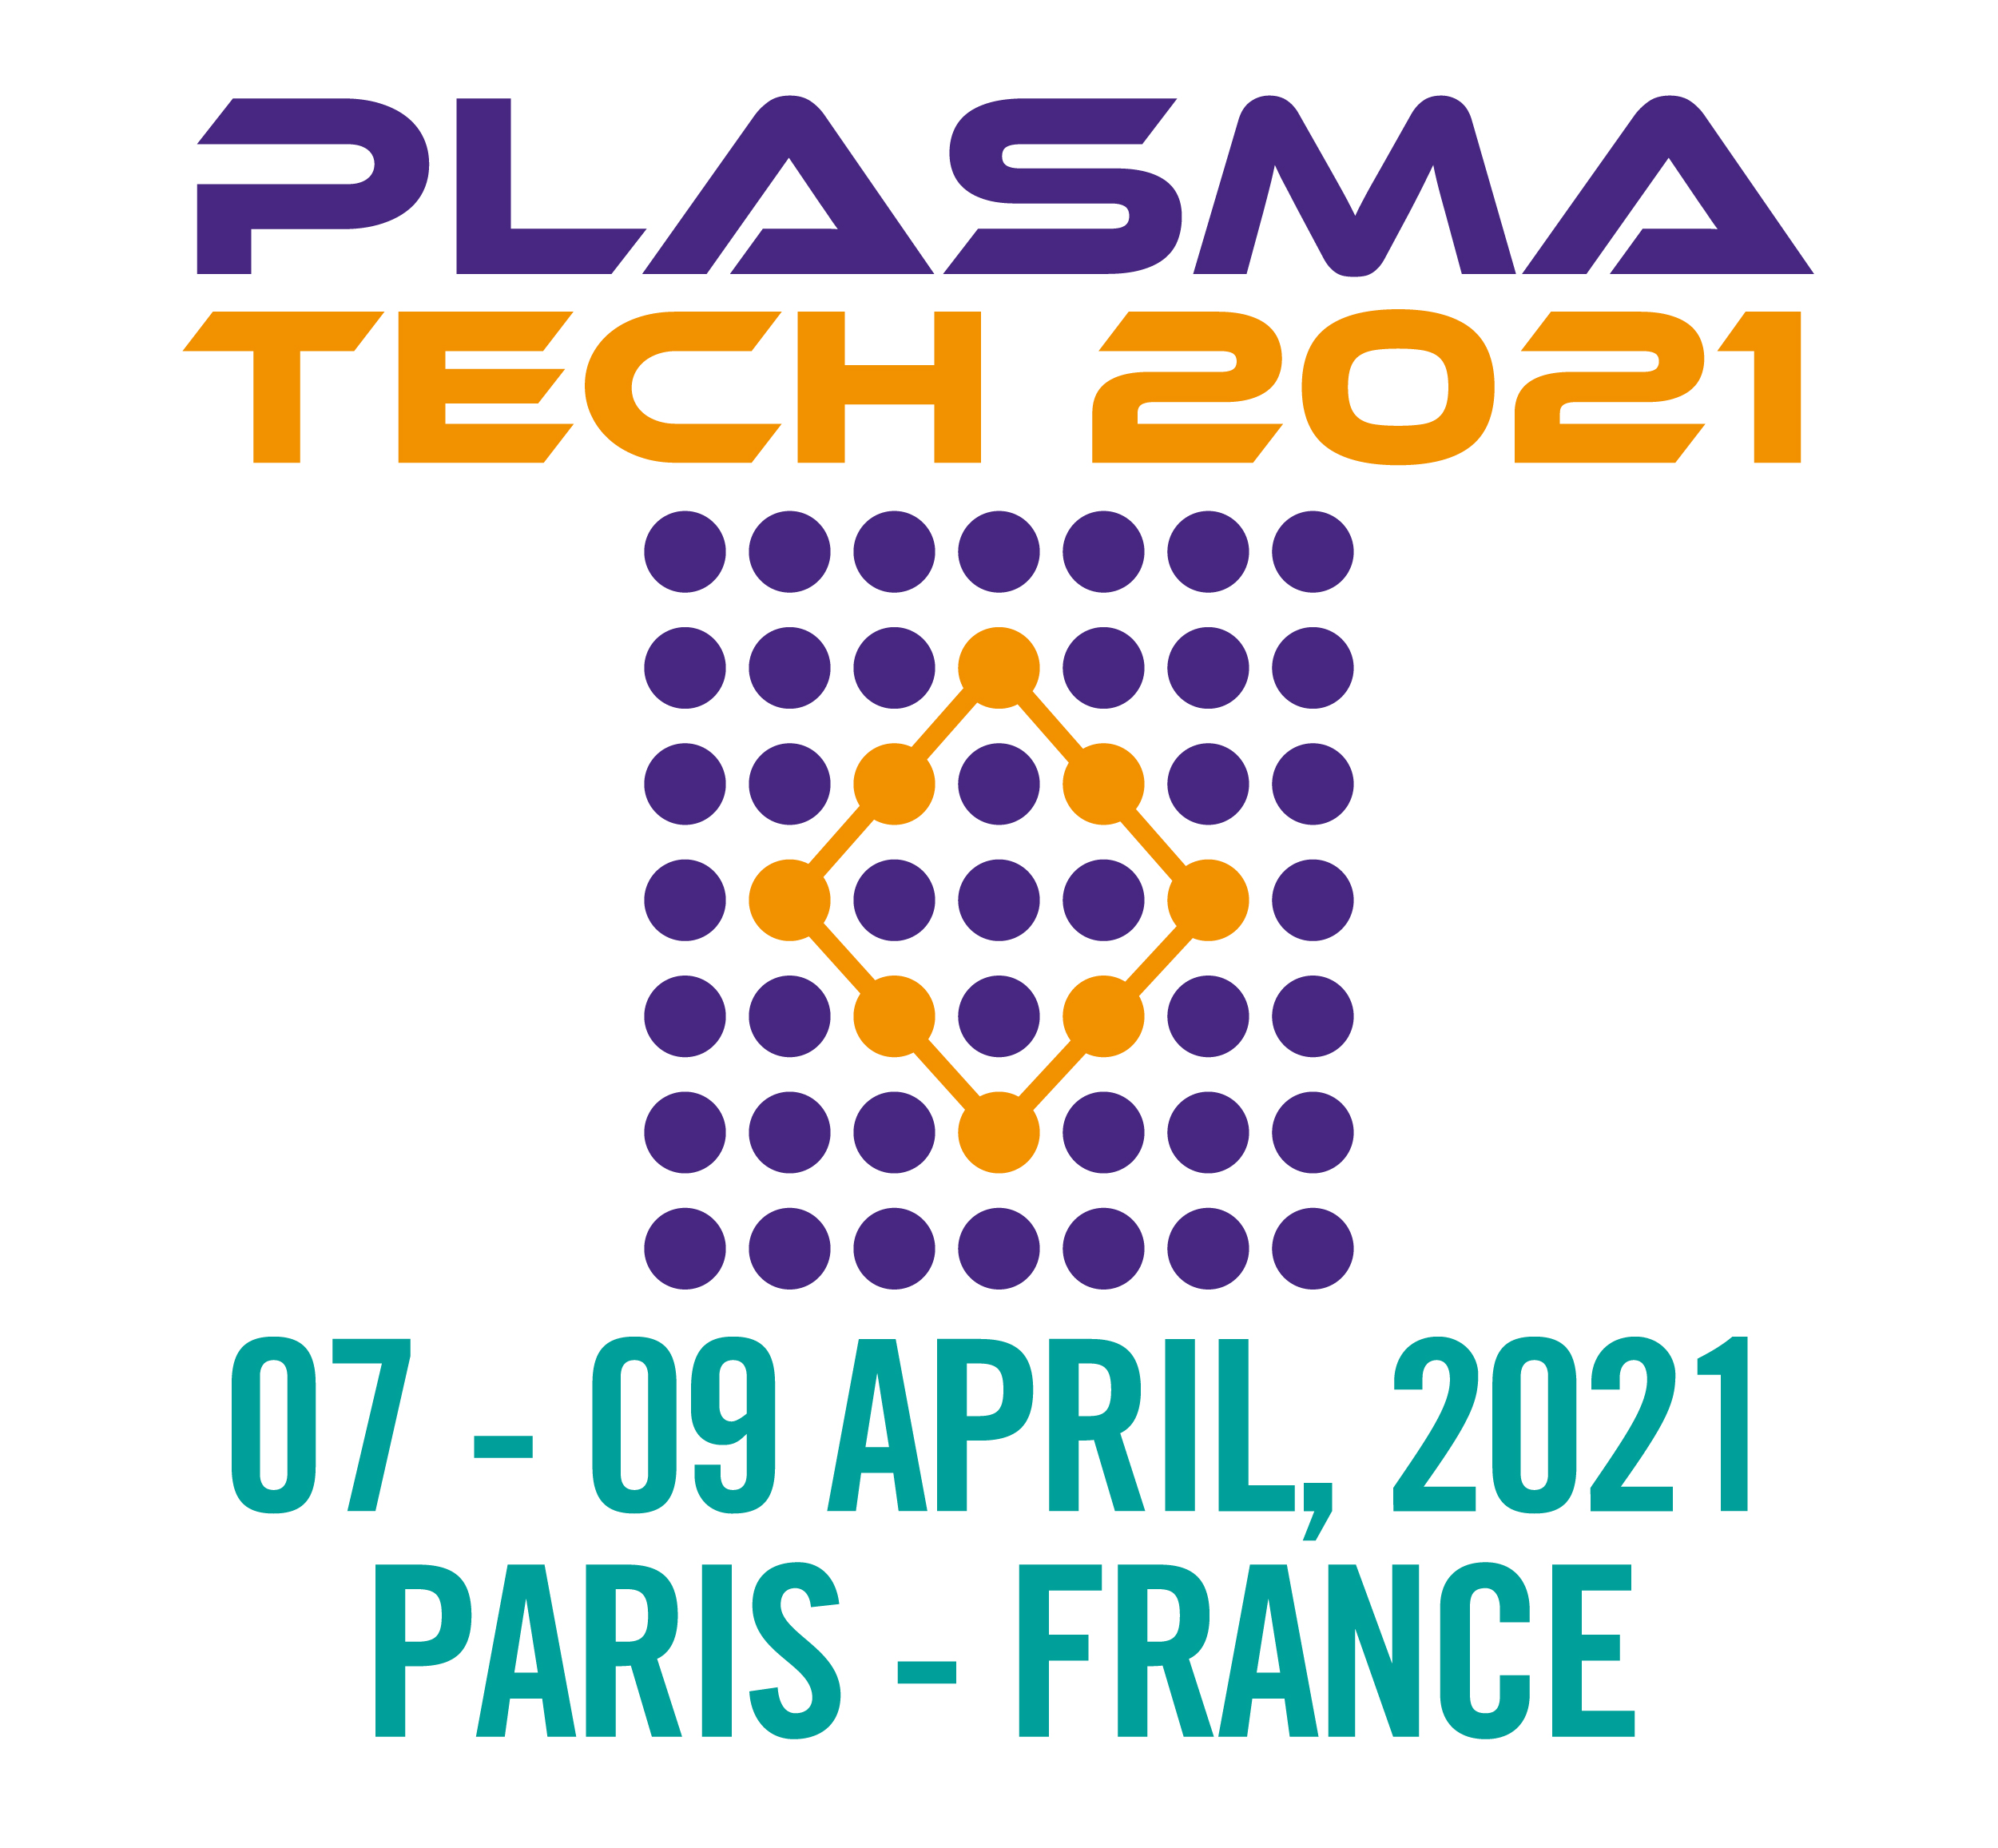 Plasma Processing and Technology International Conference (Plasma Tech 2021)